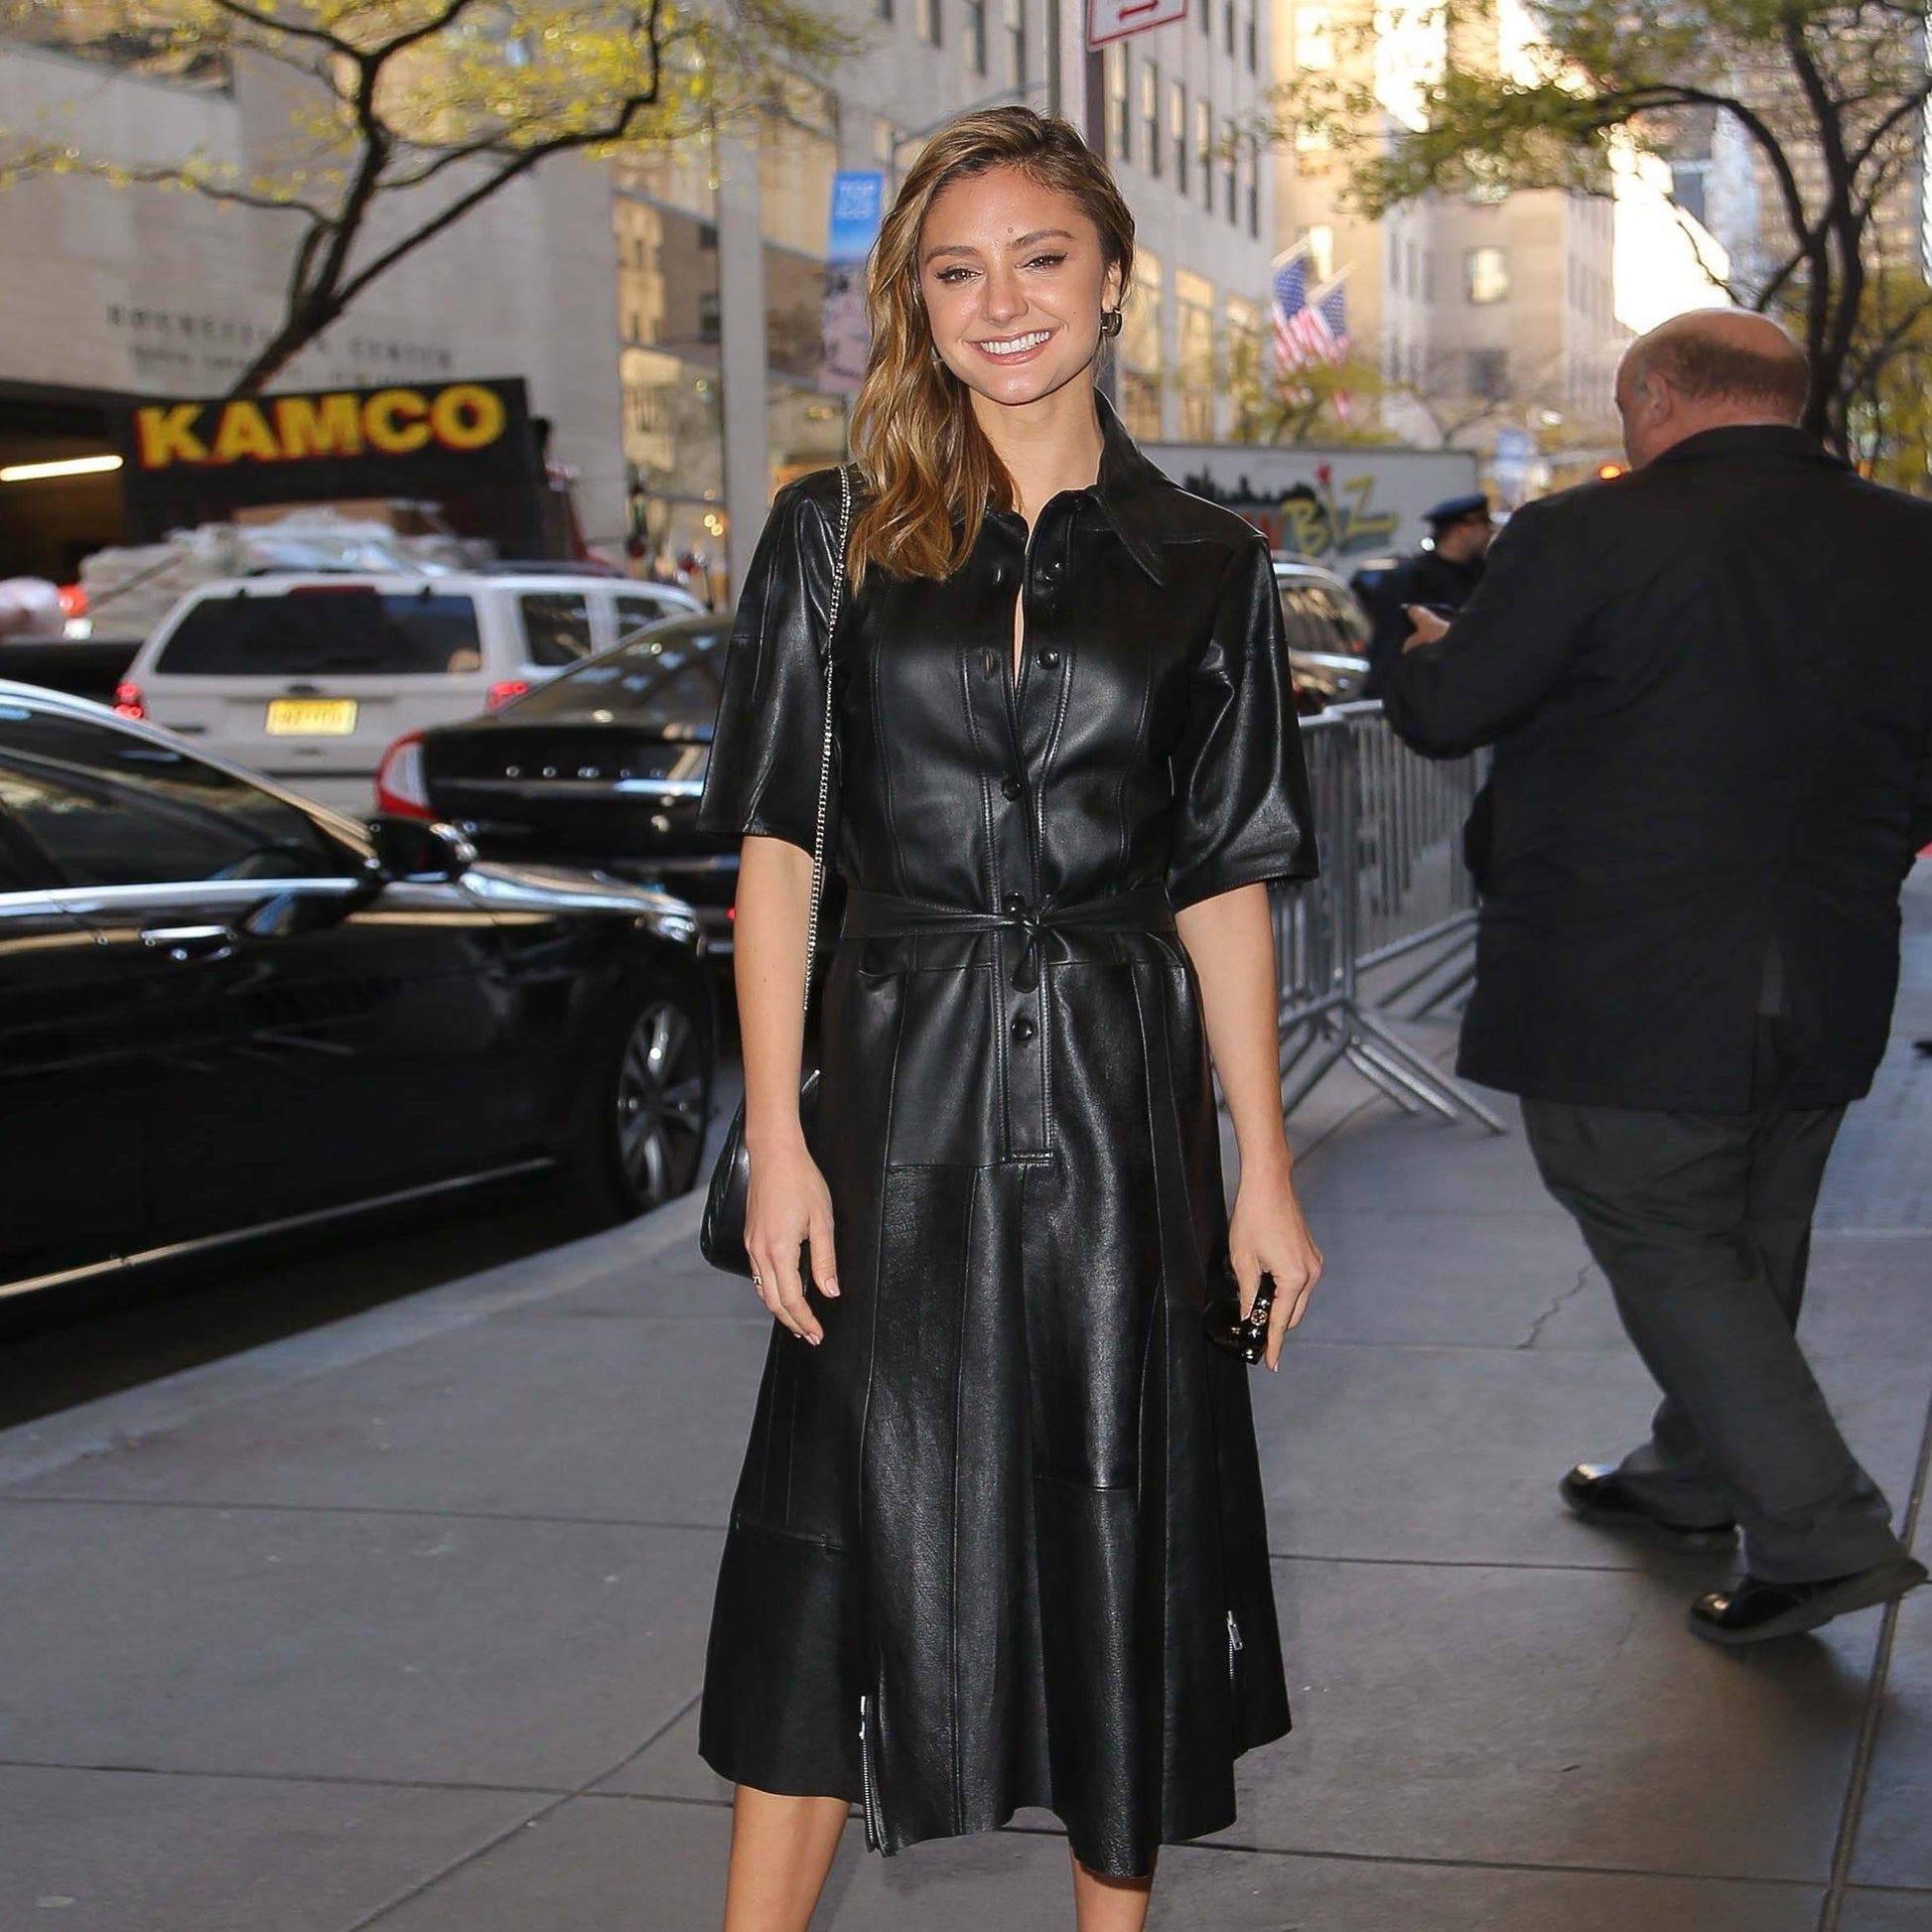 Genuine Leather Celebrity Christina Evangeline Black Dress - Luxurena Leather